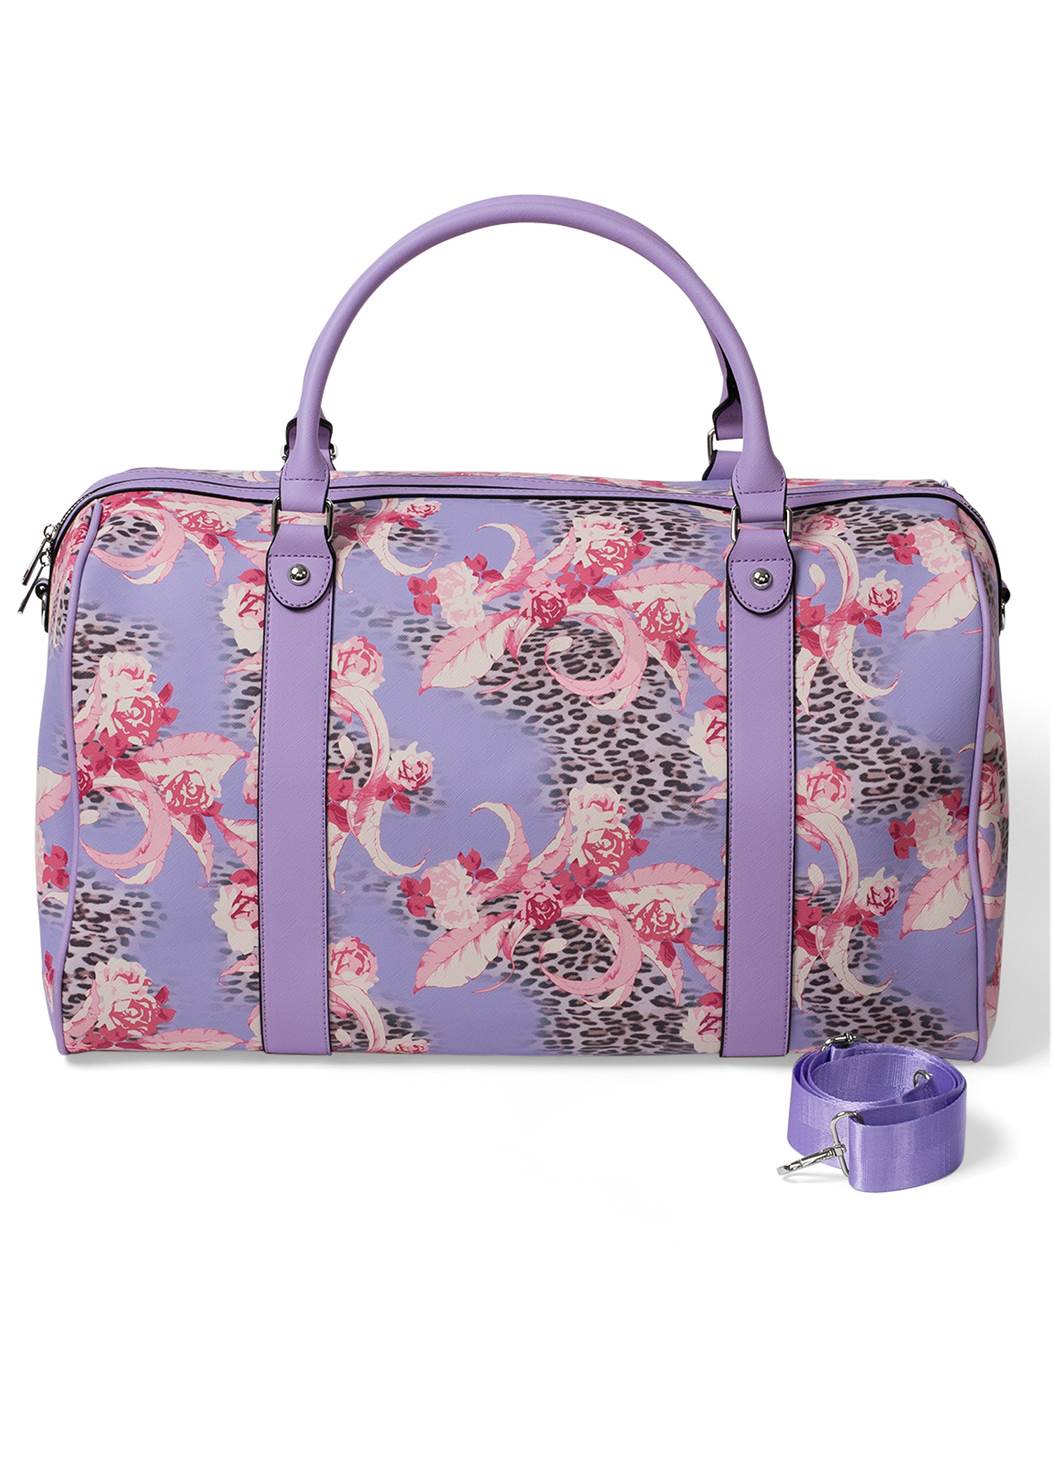 Women's Weekender Duffle Bag - Purple Multi, Size O/S by Venus